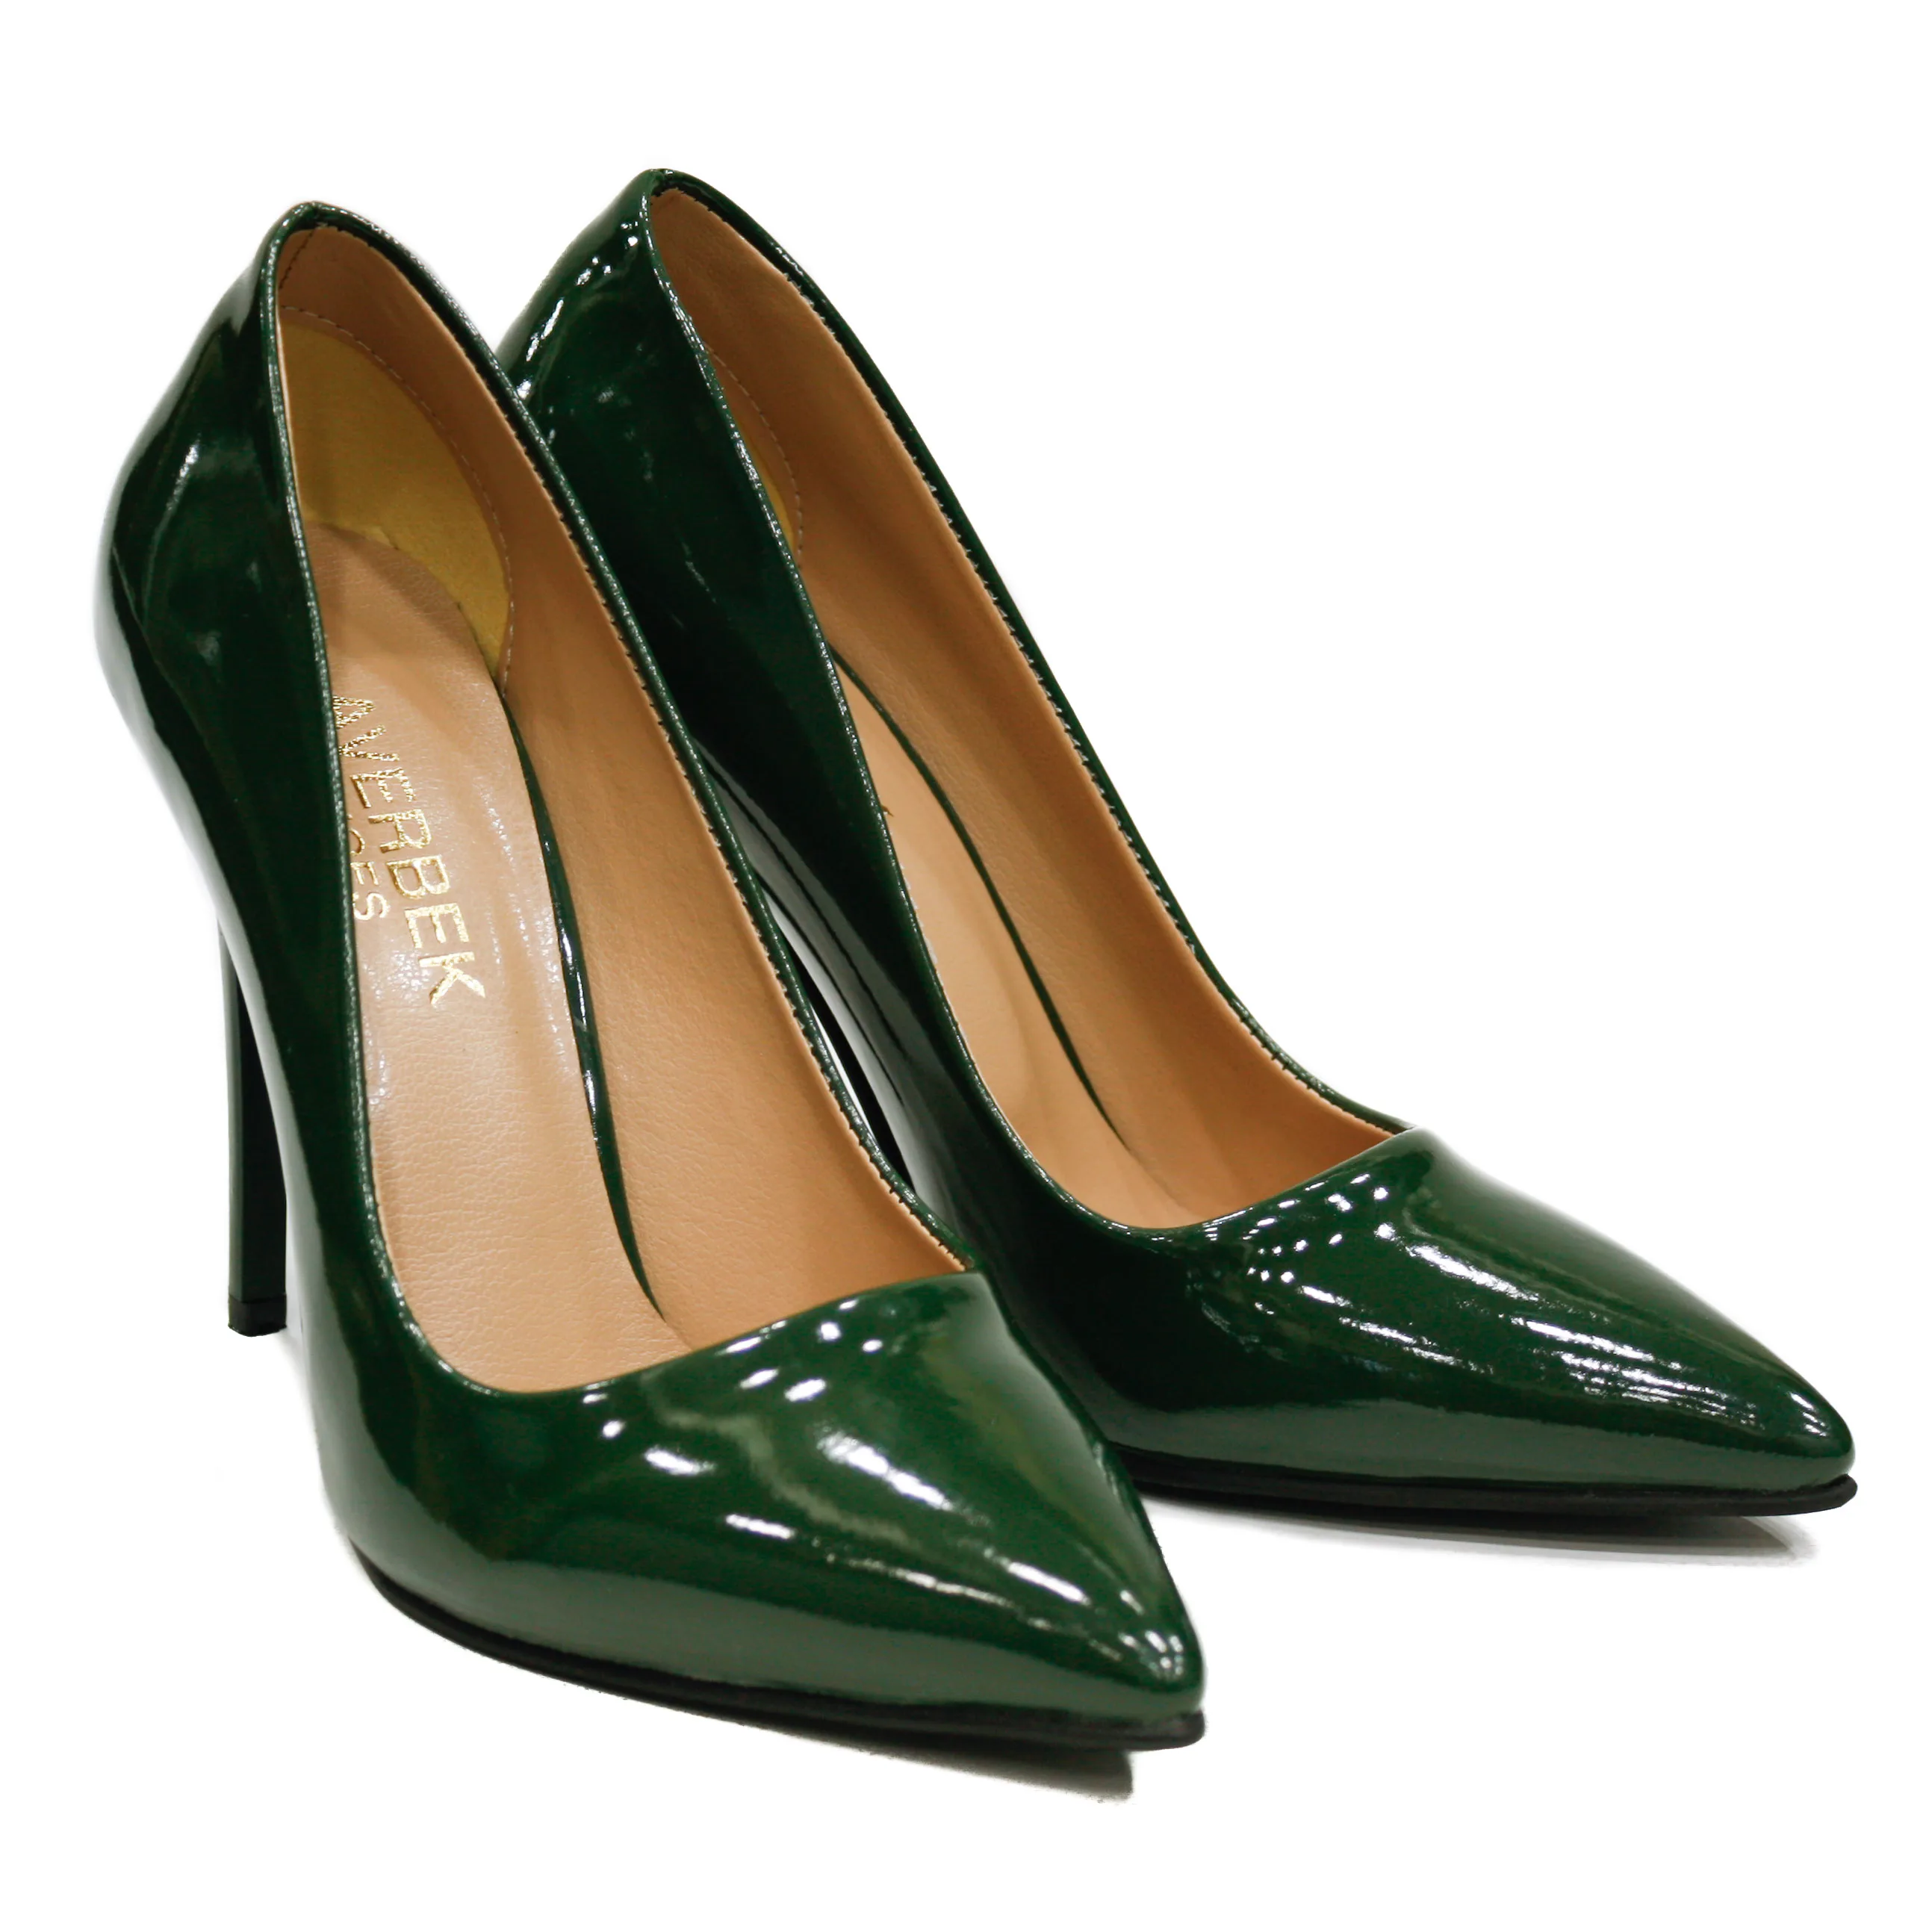 Jeg klager Busk klinge Women's Shiny Green Faux Patent Leather Cheap Ladies Pumps High Heel  Stiletto Shoes - Buy Heels,Stiletto Heels,Pumps Shoes Product on Alibaba.com